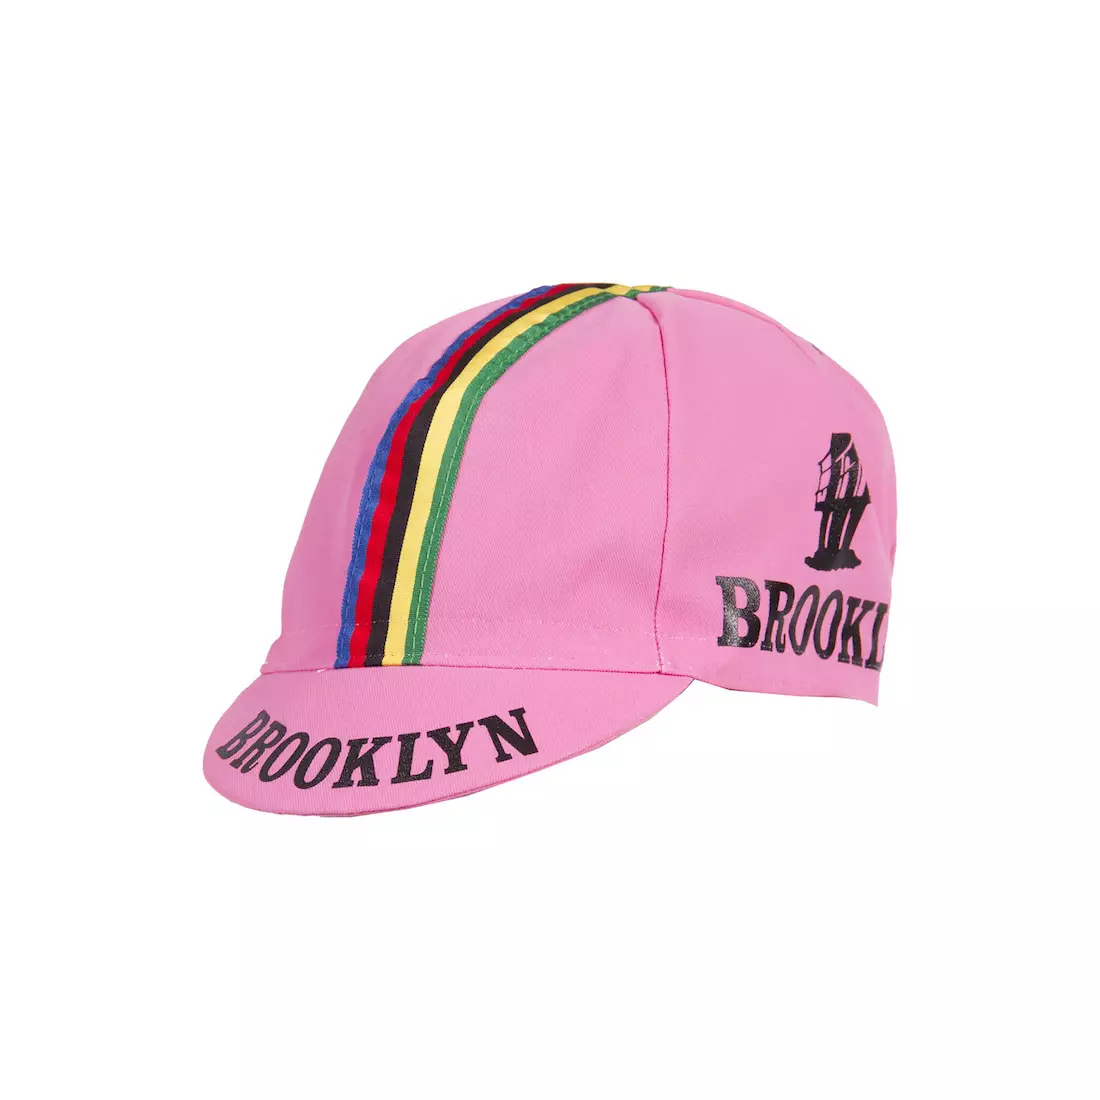 GIORDANA SS18 Radmütze – Brooklyn – Giro Pink mit Streifenband GI-S6-COCA-BROK-GIRO Einheitsgröße